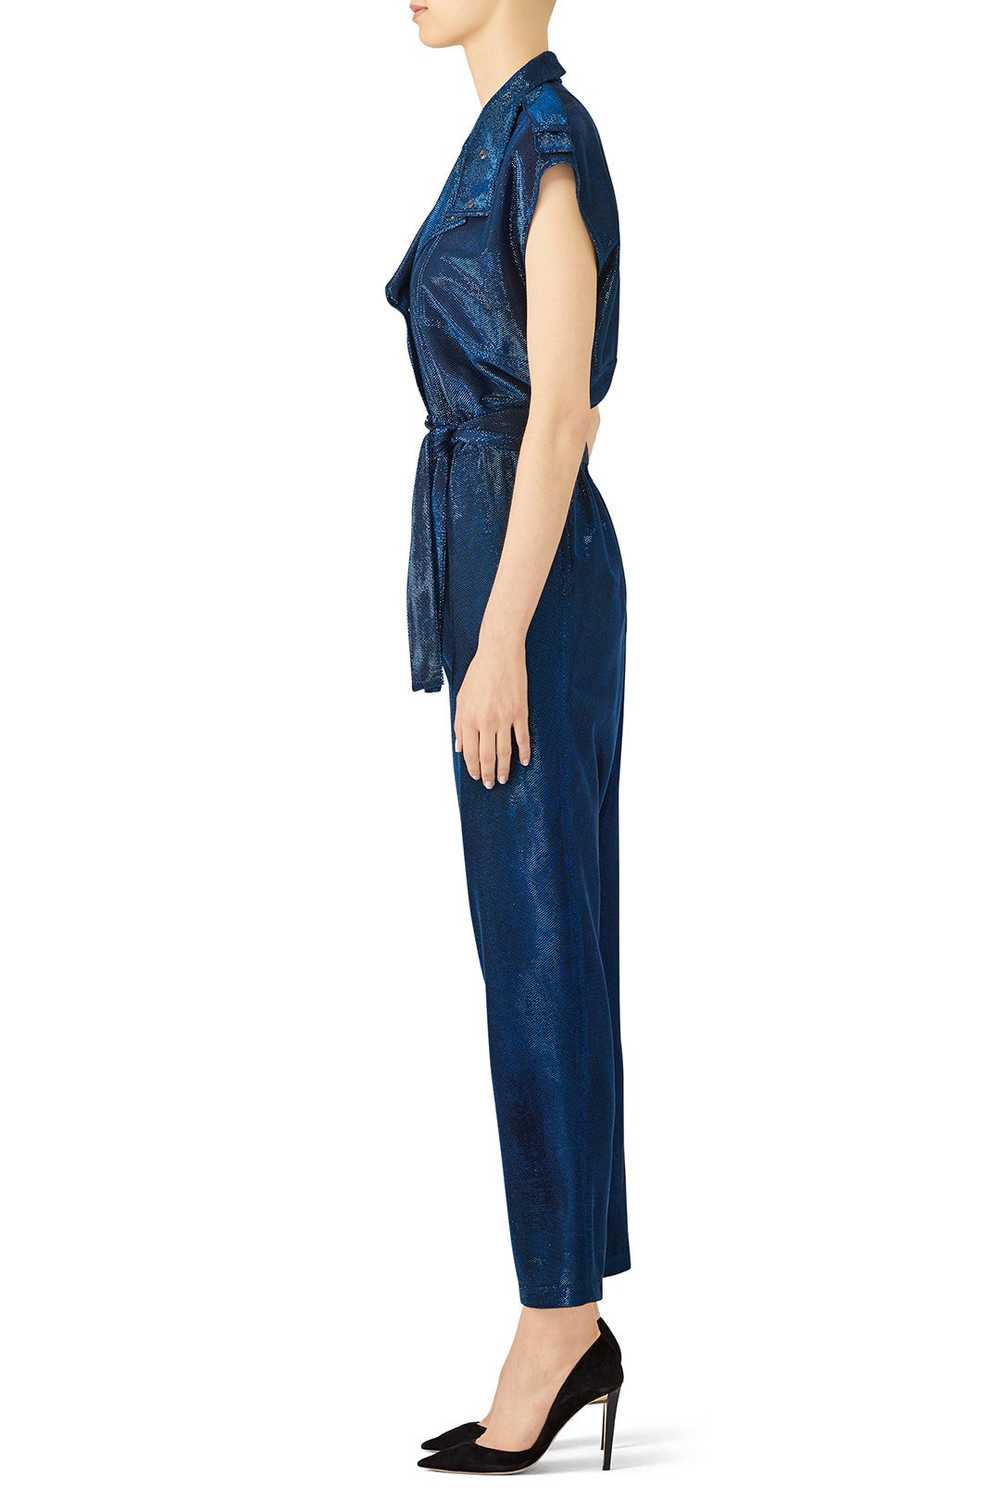 Carolina Ritzler Retro Blue Jumpsuit - image 3